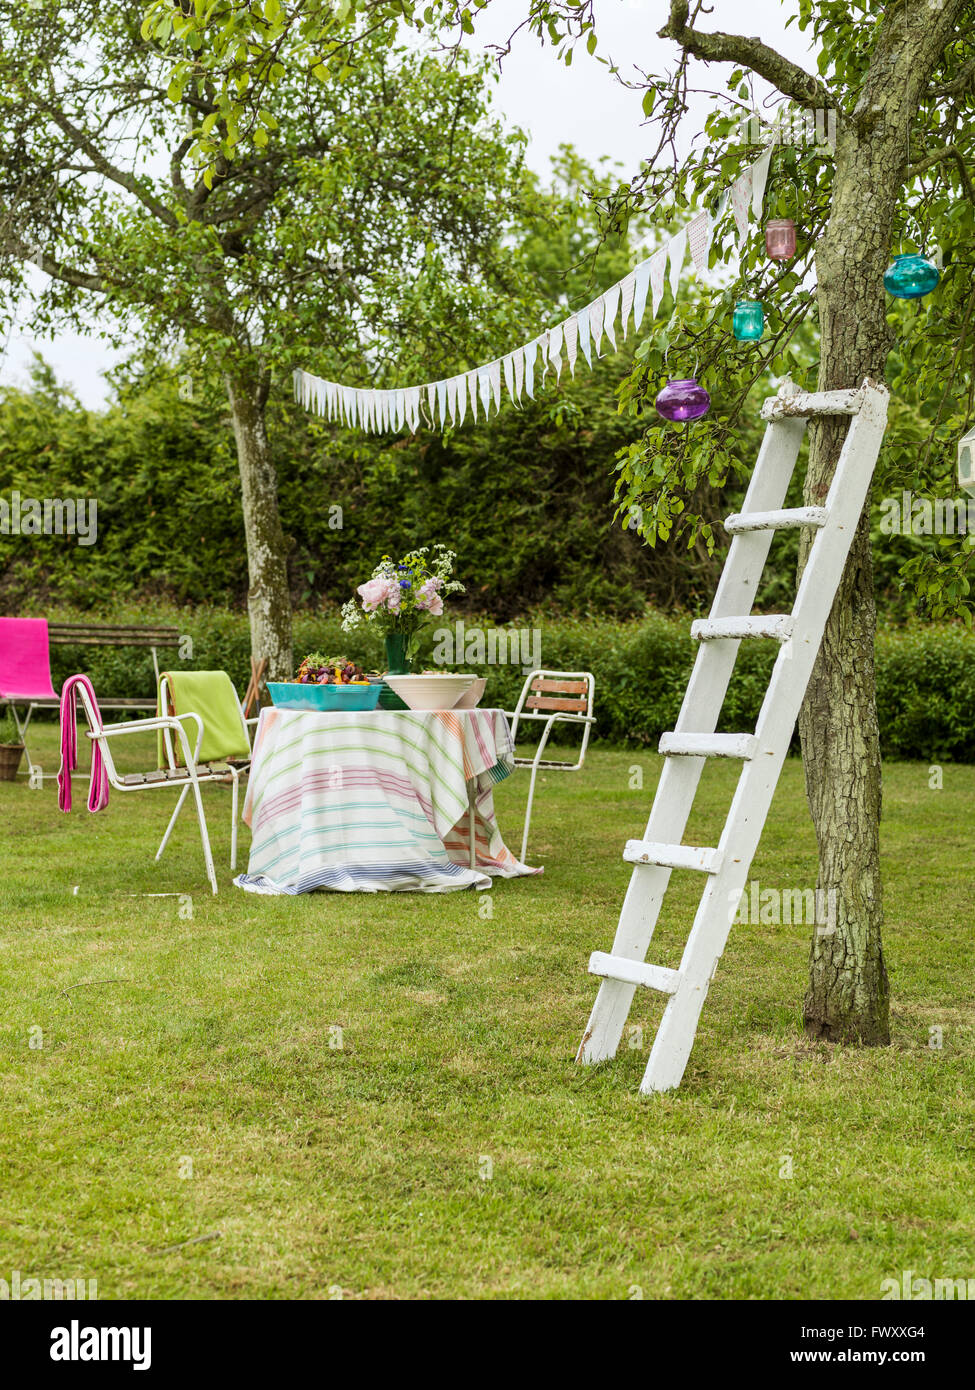 Sweden, Skane, Backyard prepared for midsummer celebrations Stock Photo